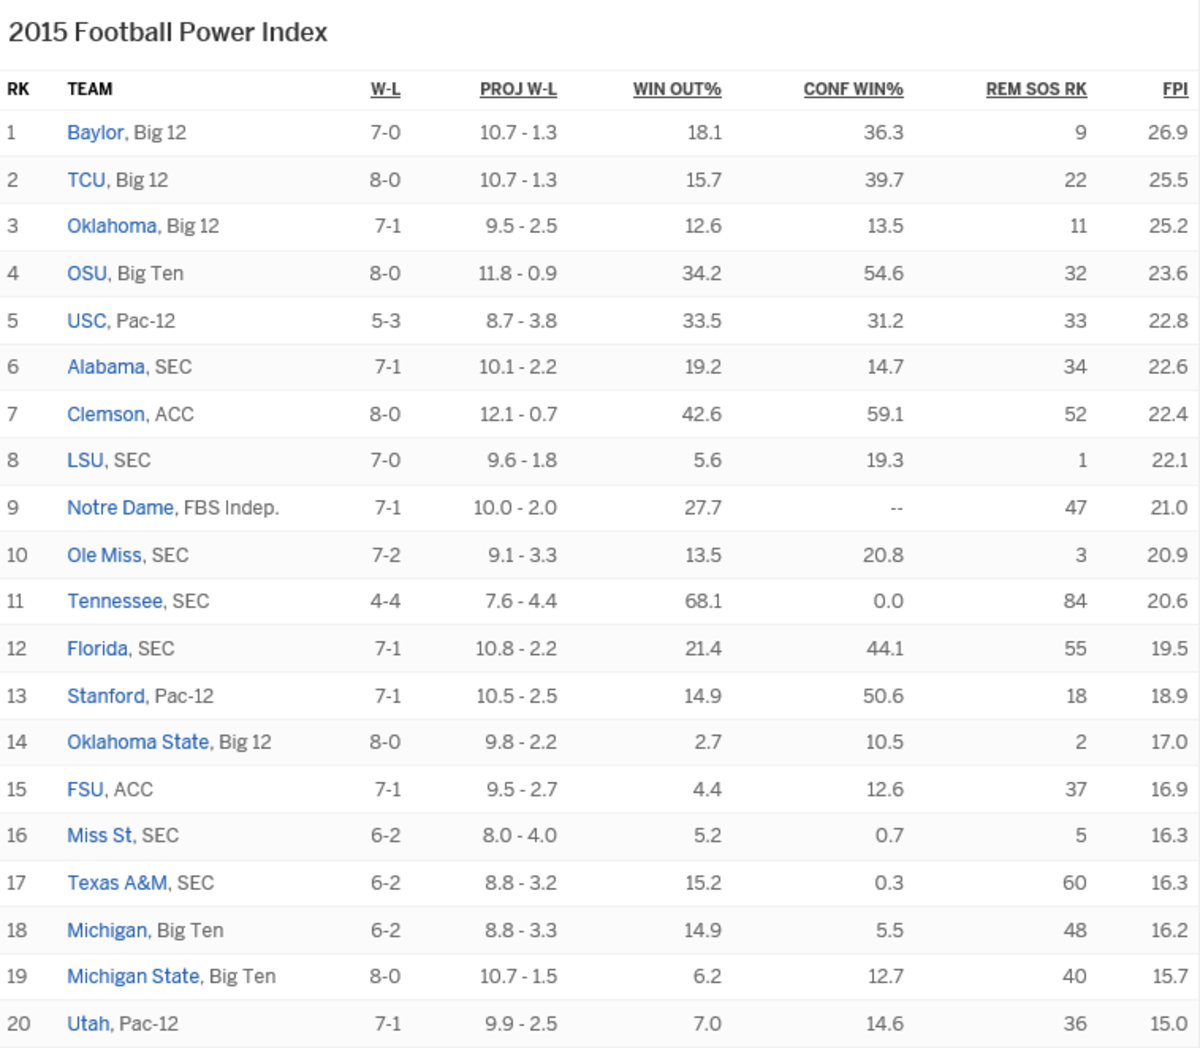 ESPN FPI rankings top 20.